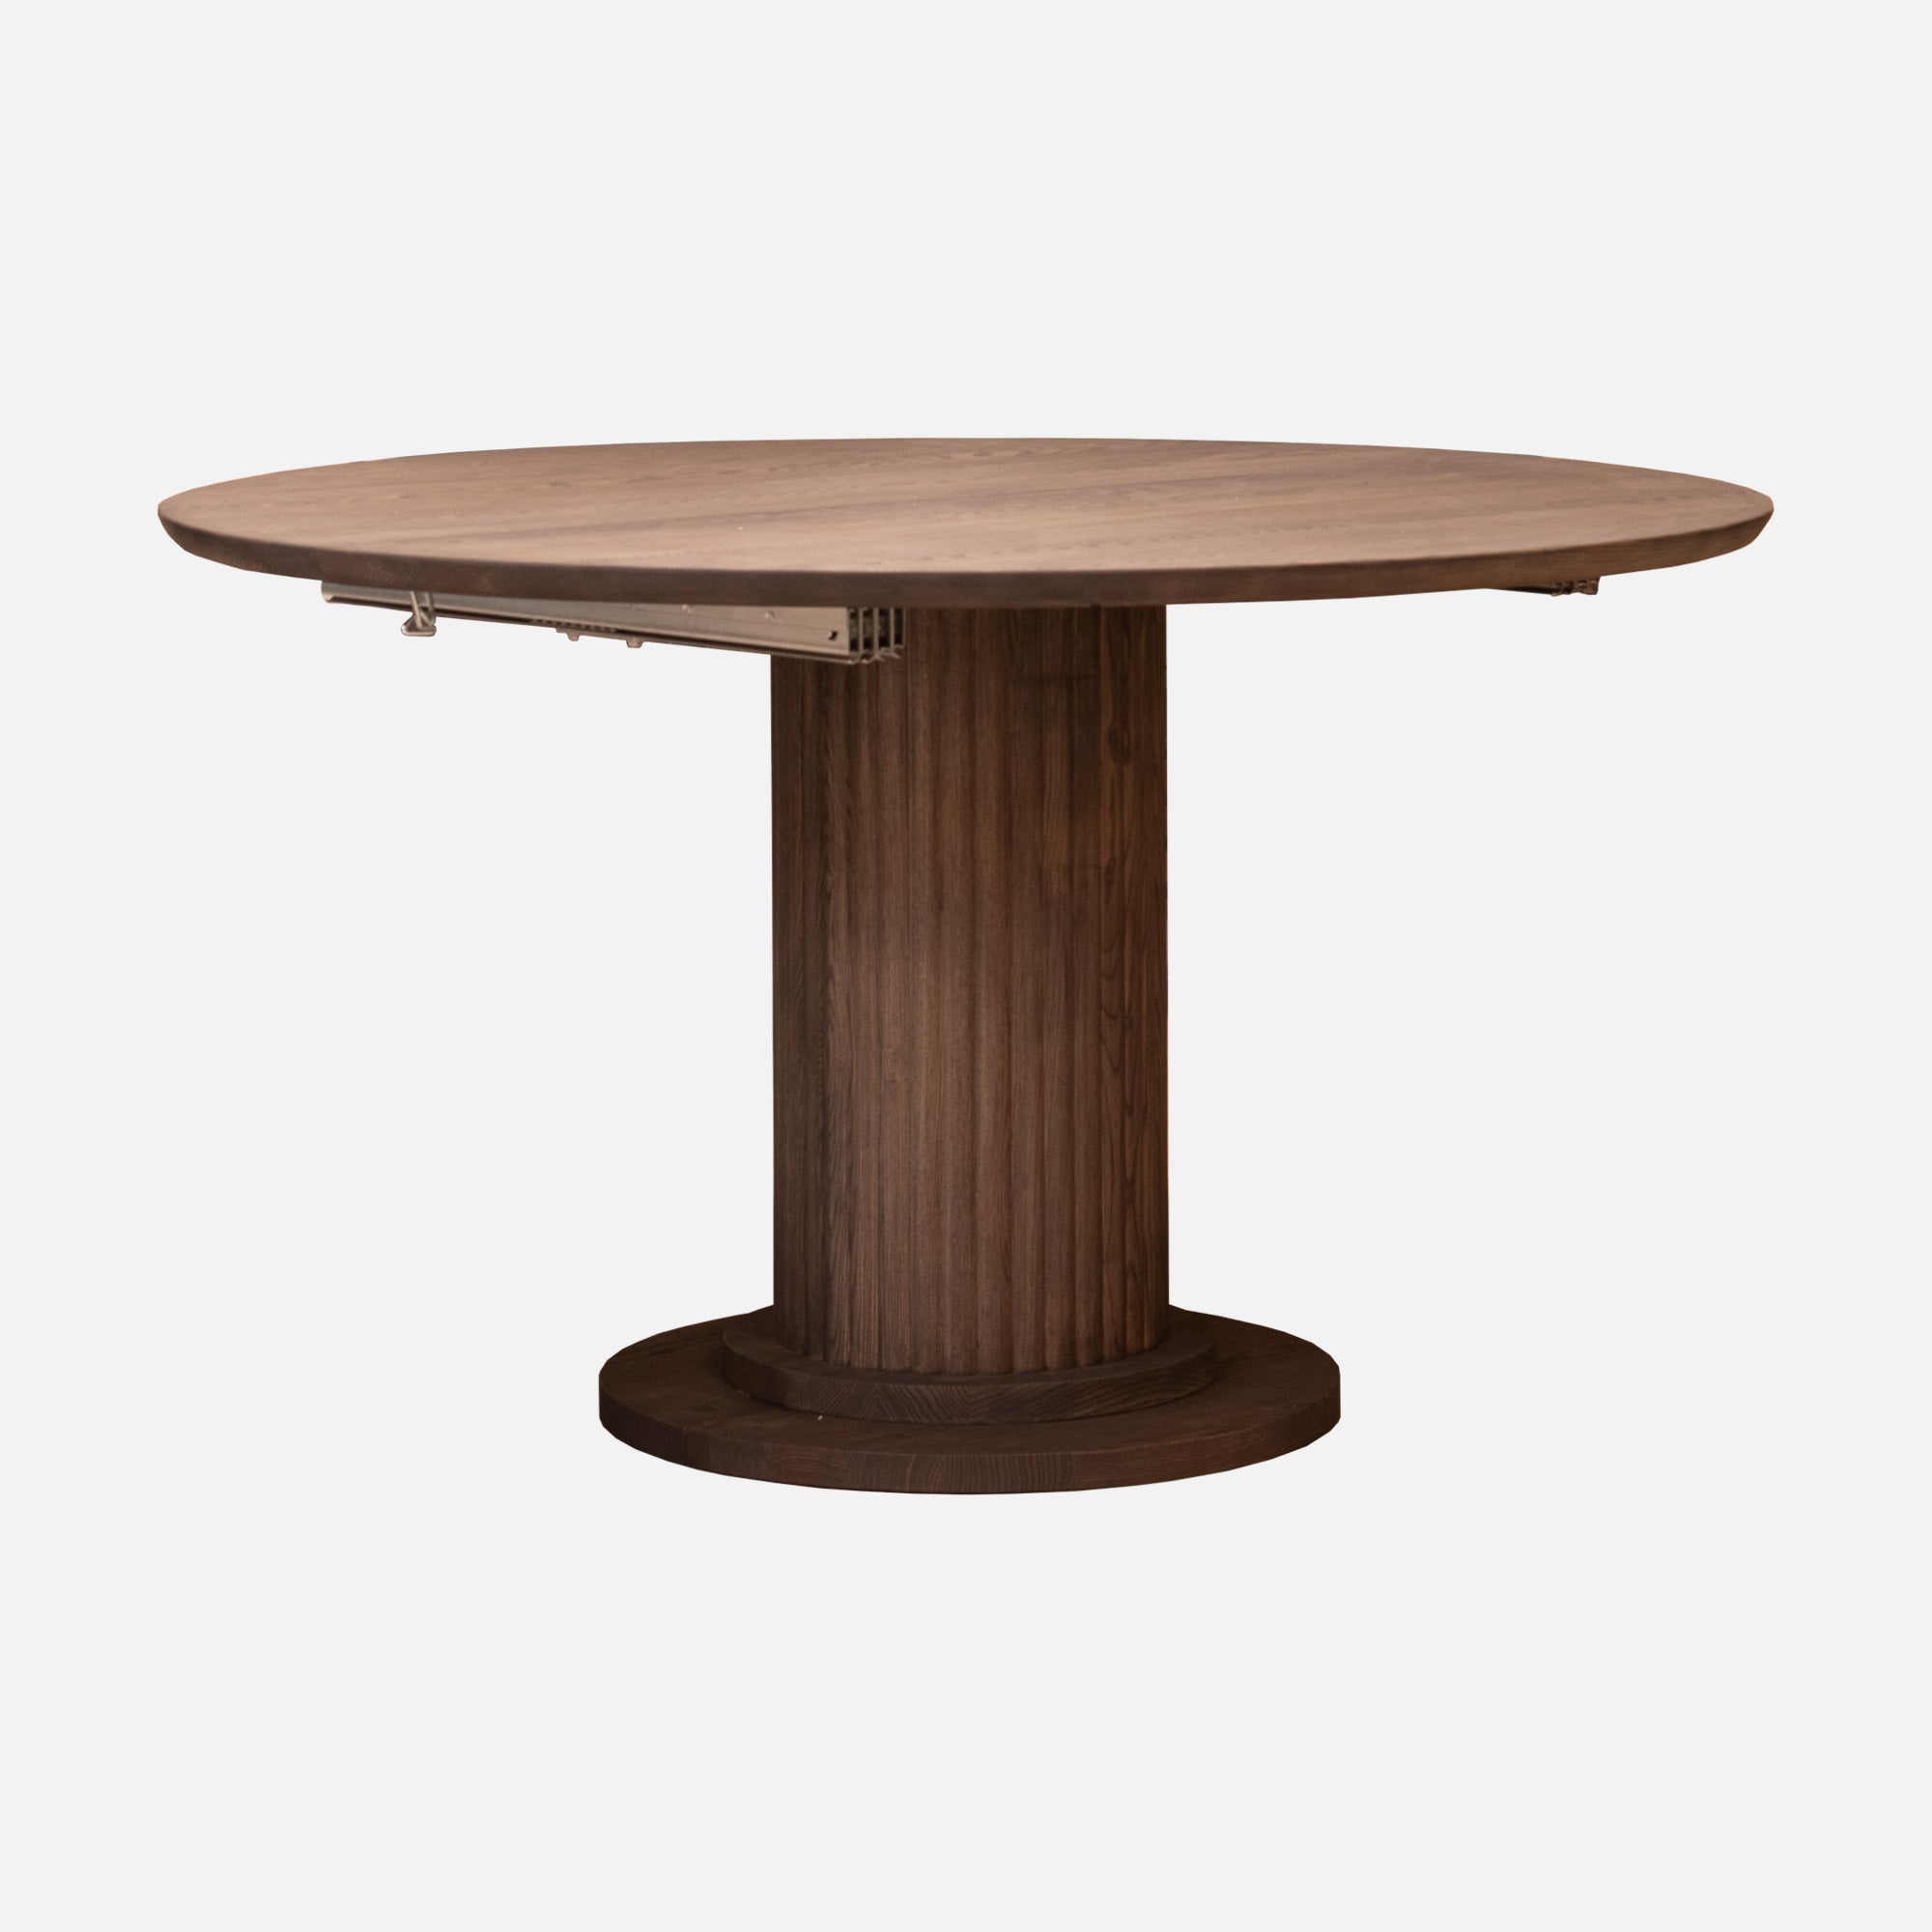 Thoren - Round Extending Dining Table 140-185cm